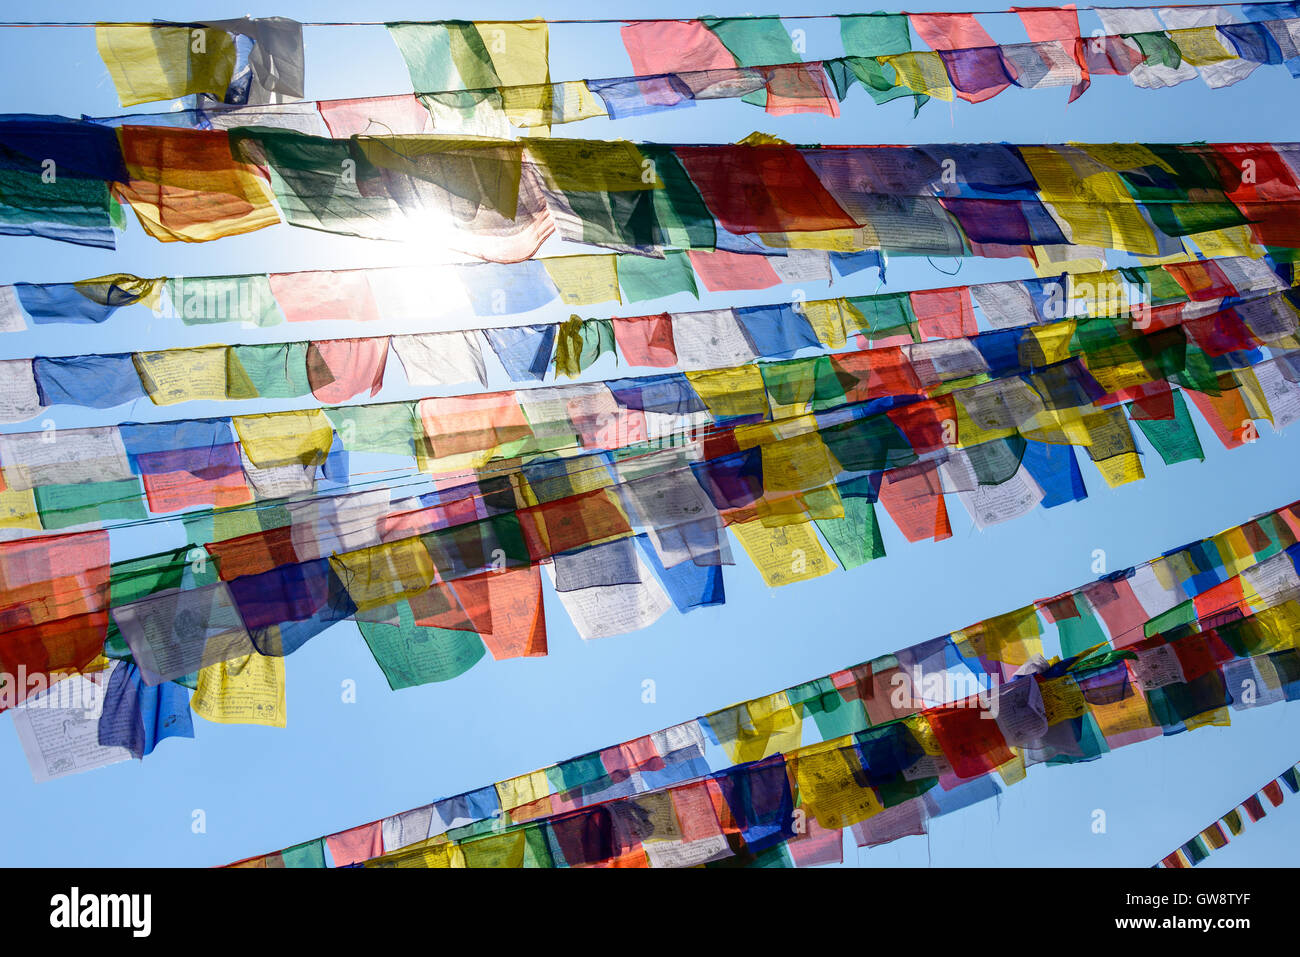 Tibetan flag hi-res stock photography and images - Alamy